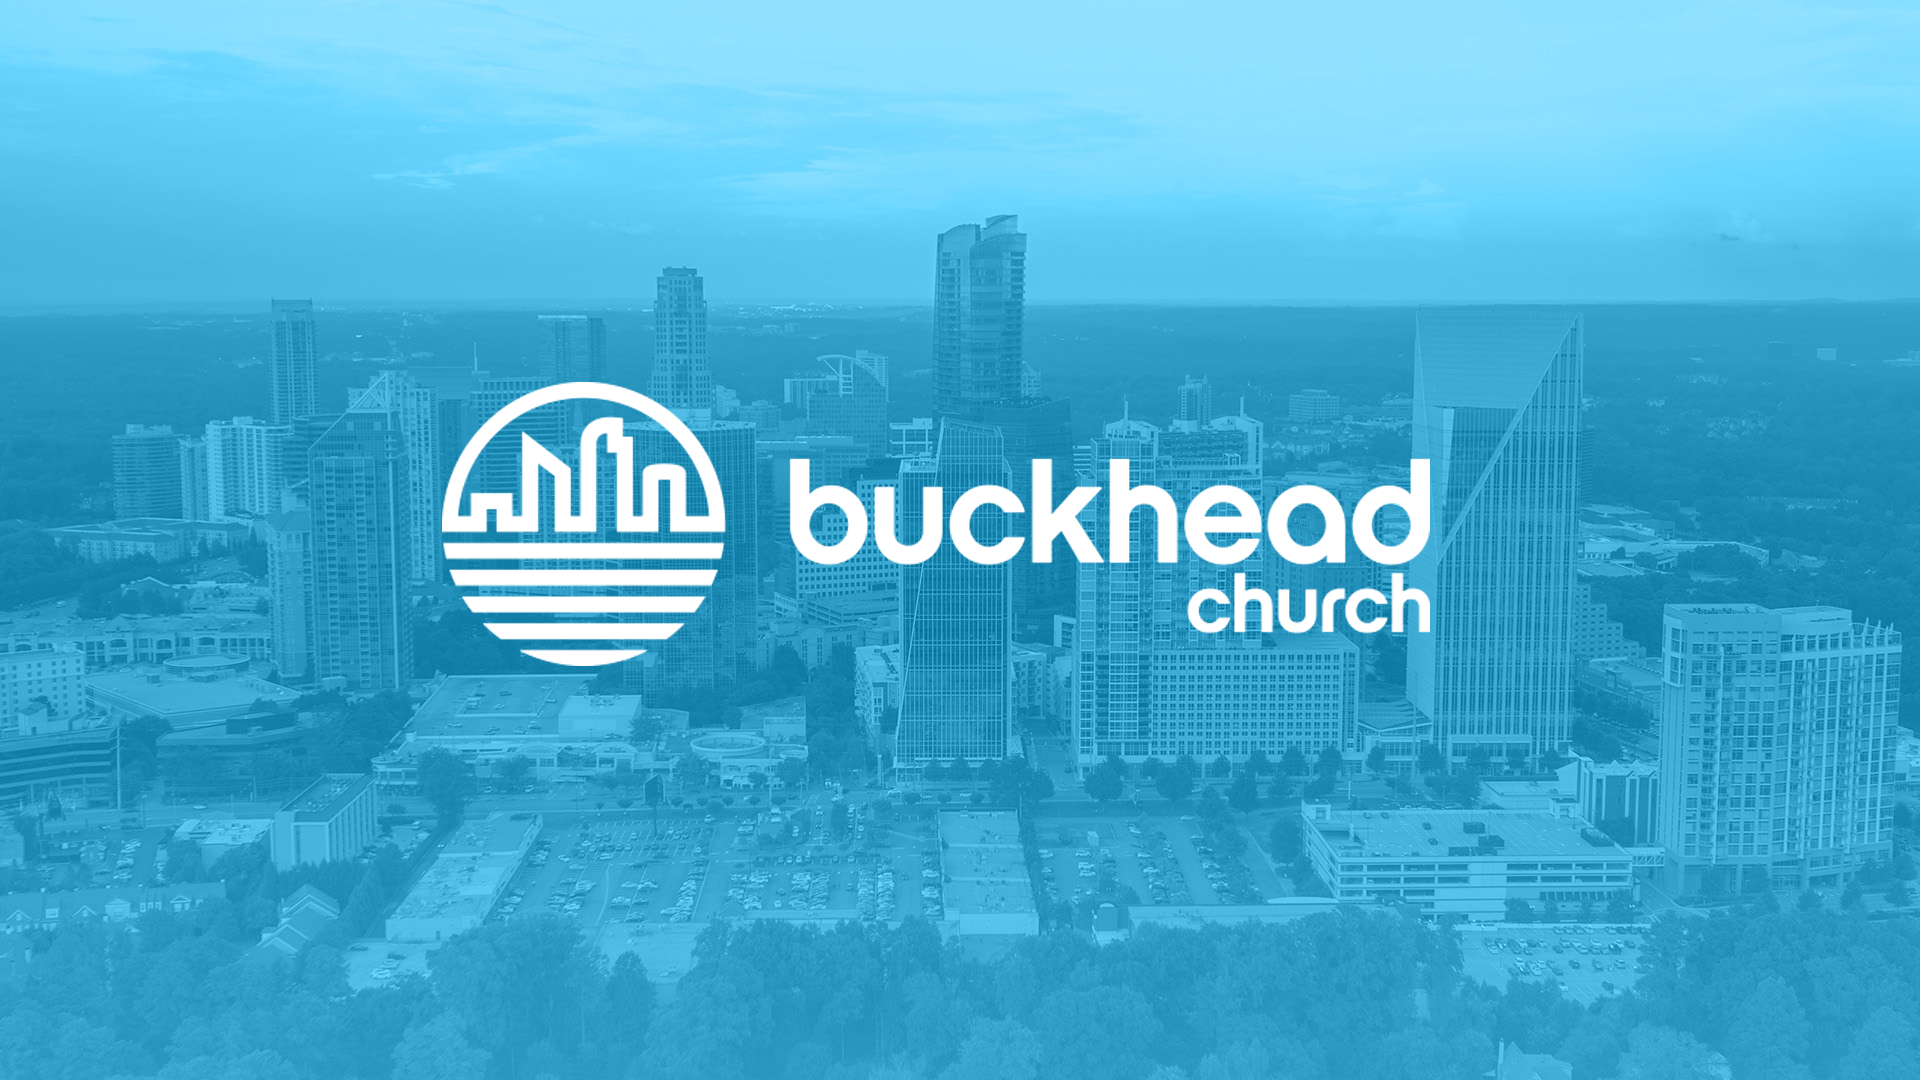 (c) Buckheadchurch.org